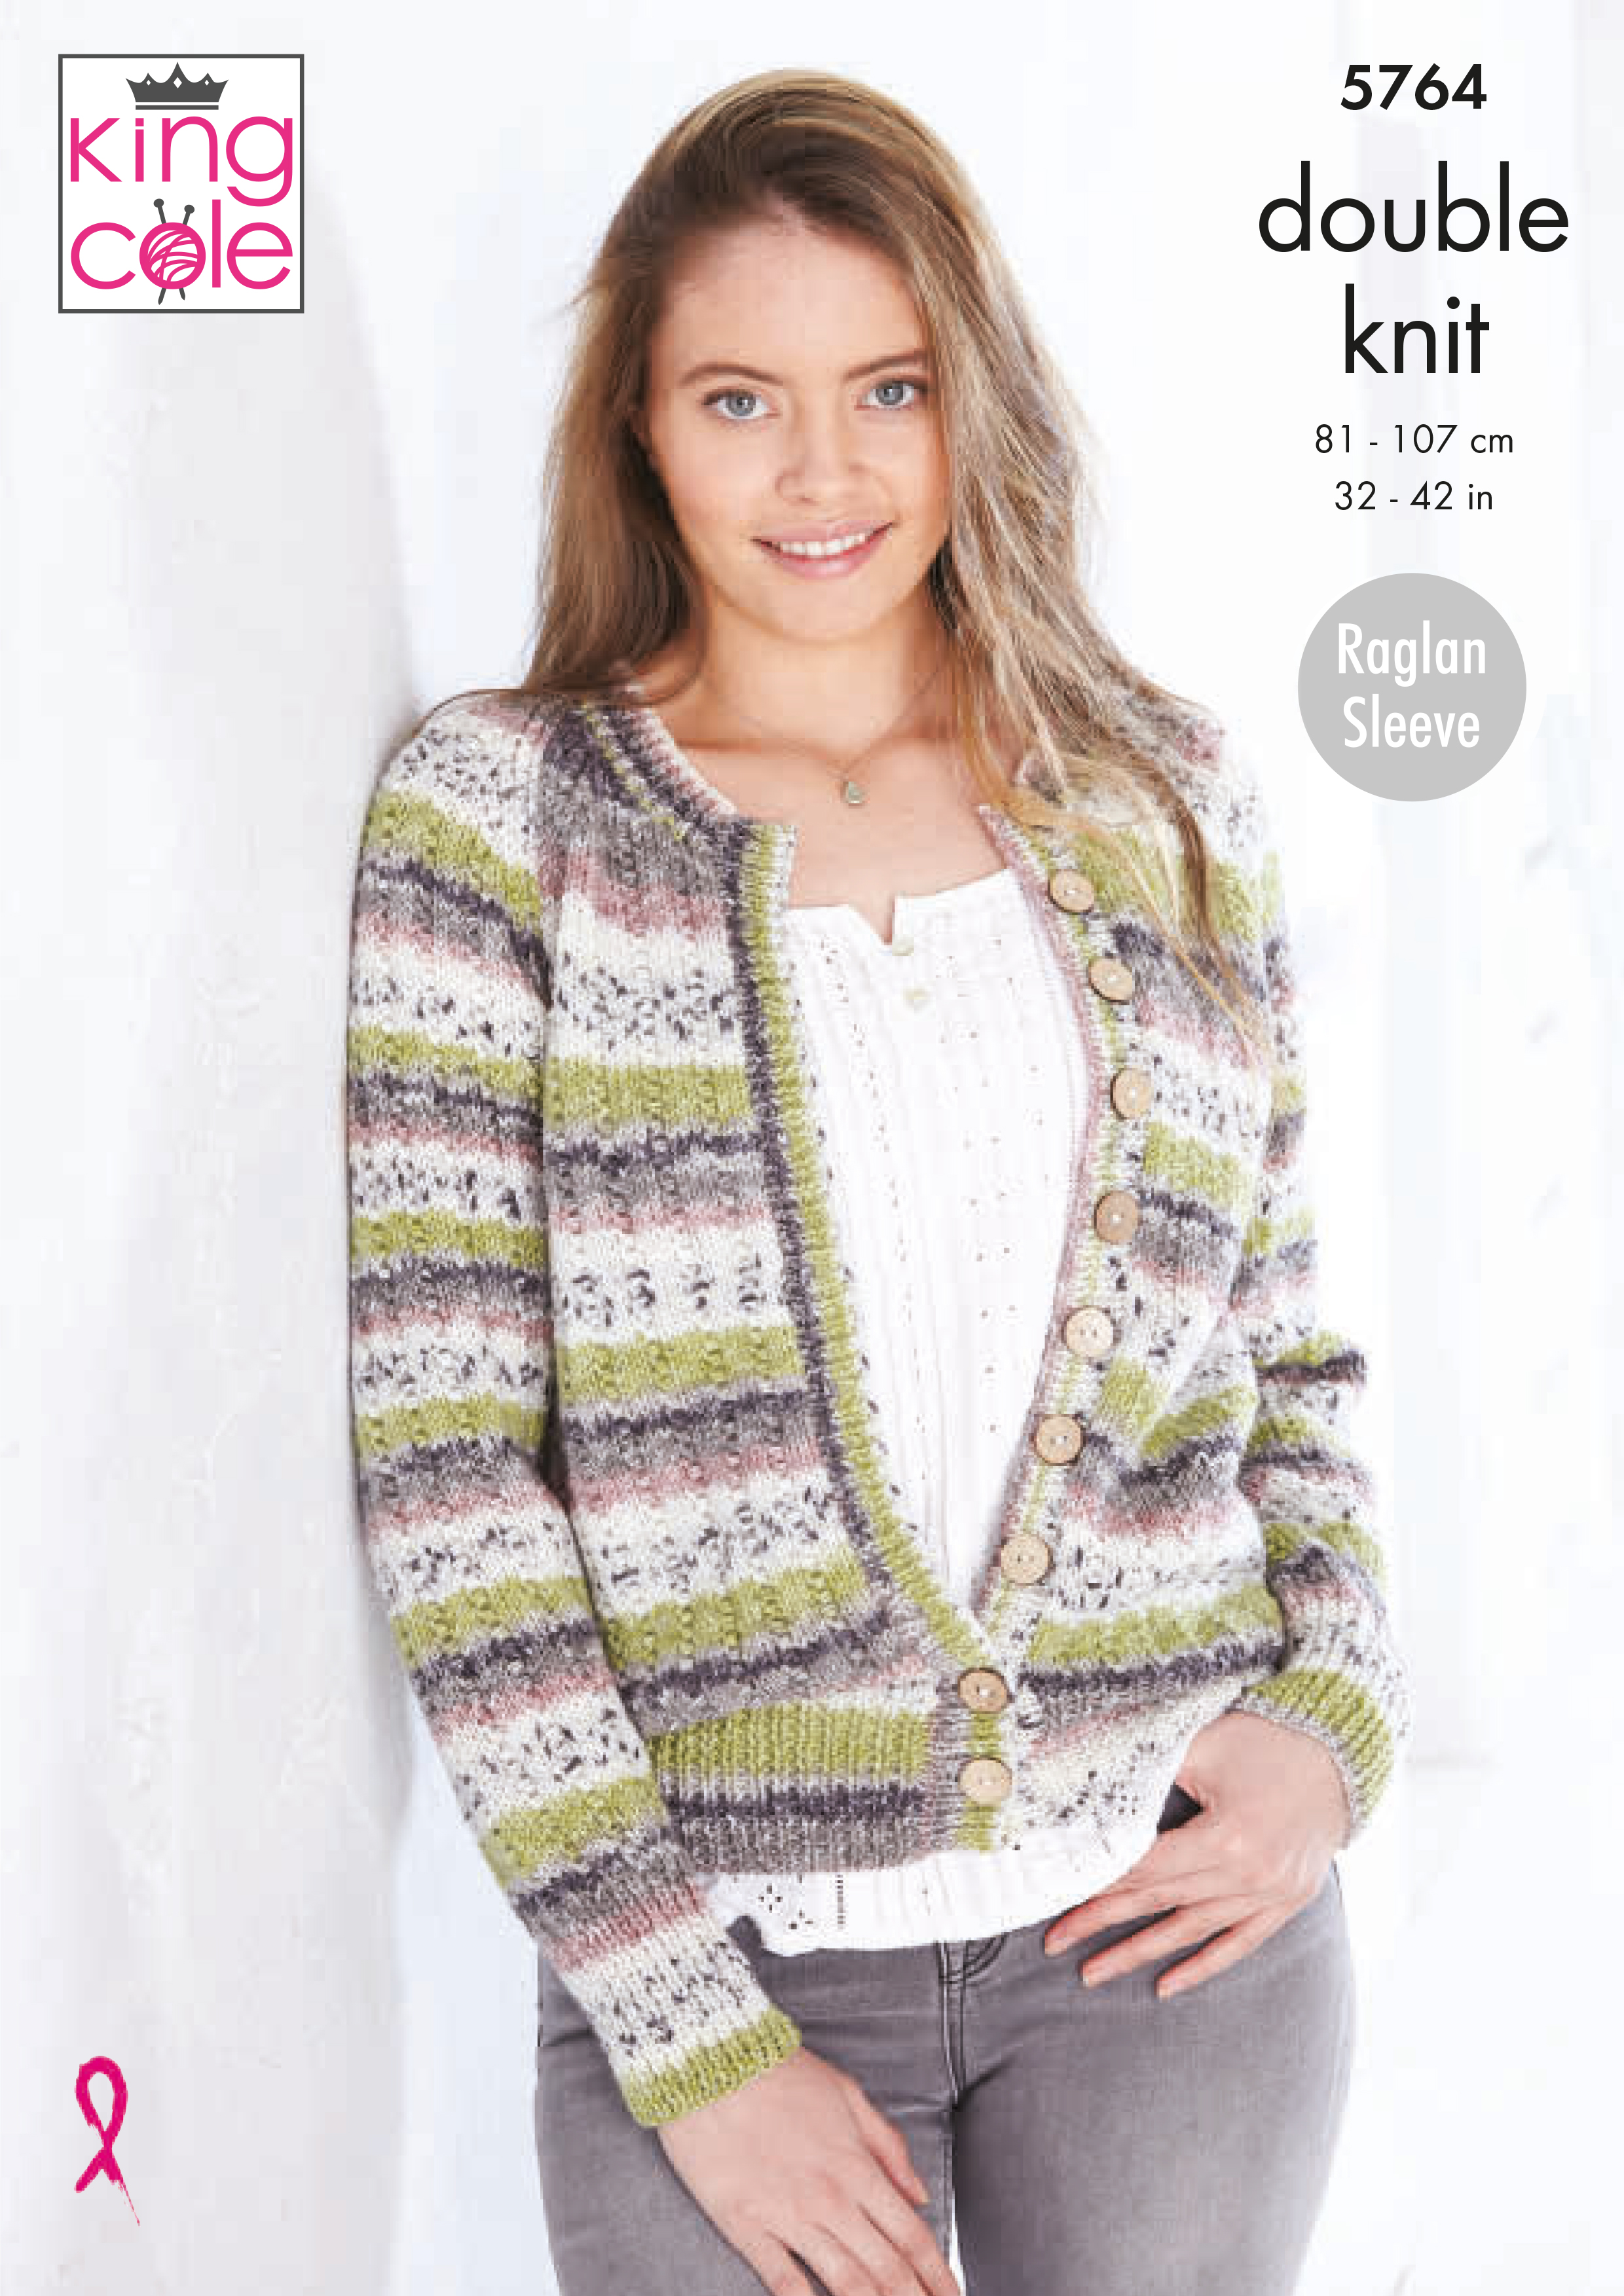 Sweater & Cardigan Knitted in Splash DK 5764 x3